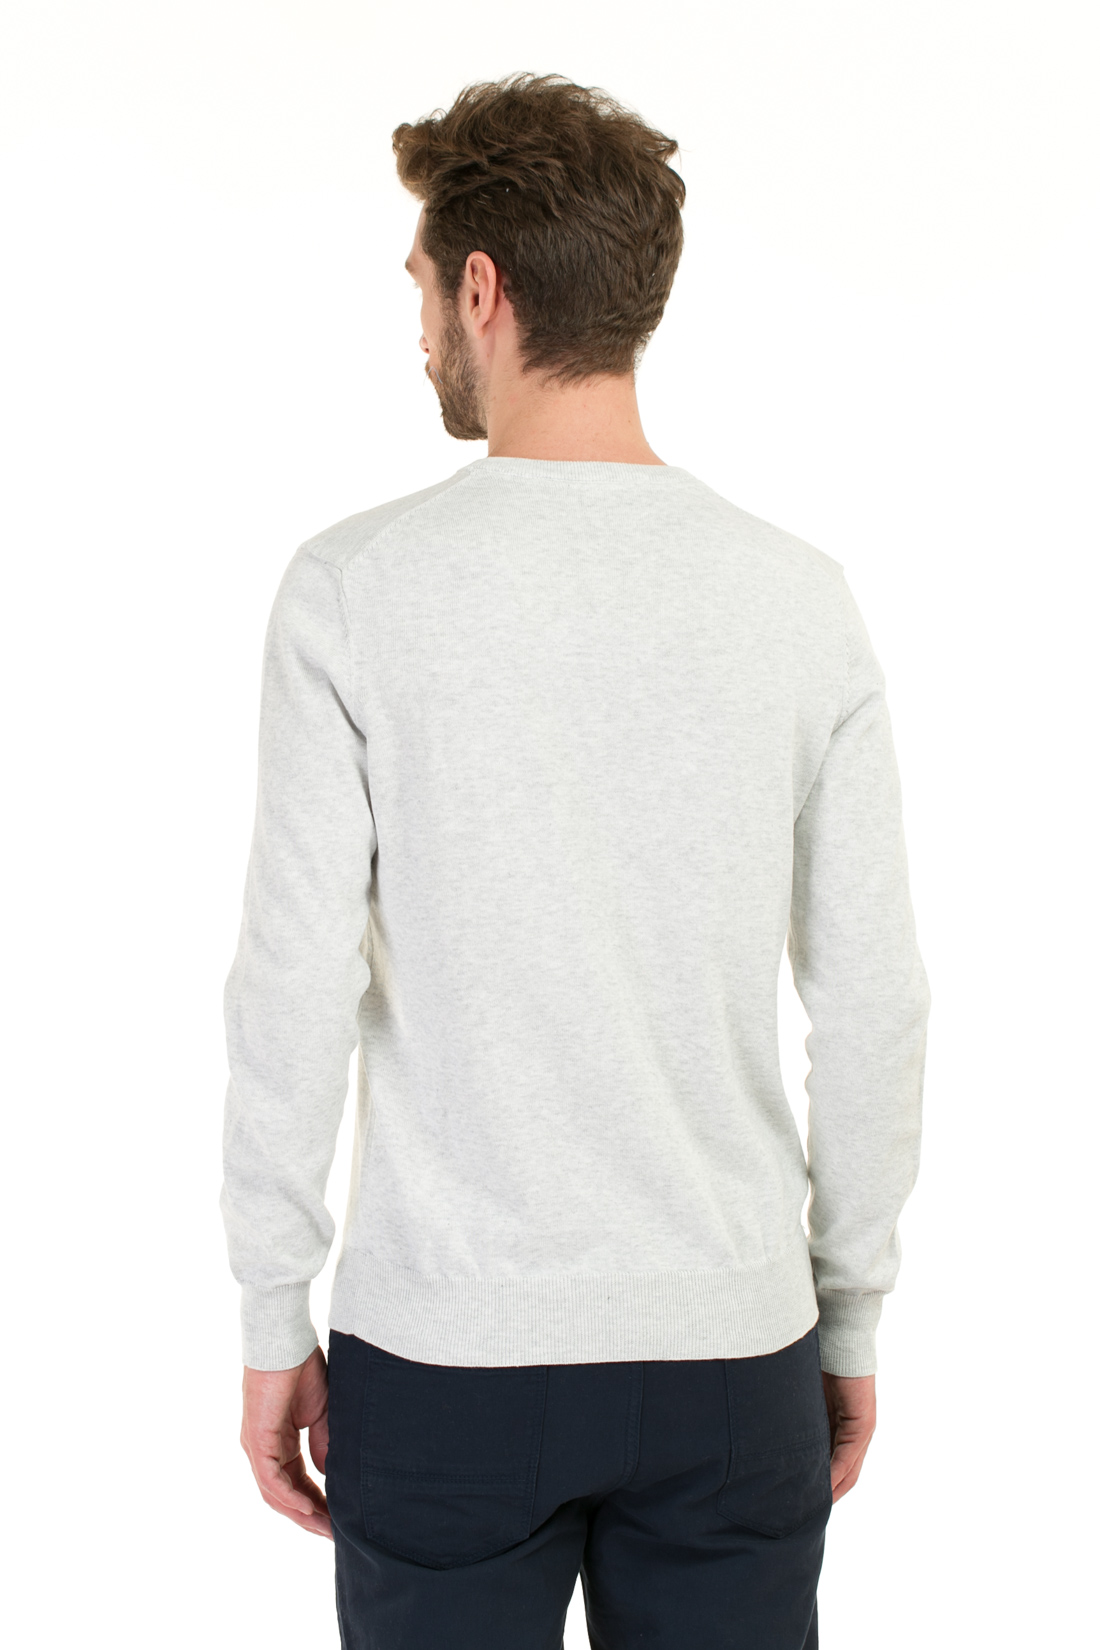 Базовый пуловер (арт. baon B637202), размер L, цвет light grey melange#серый Базовый пуловер (арт. baon B637202) - фото 2